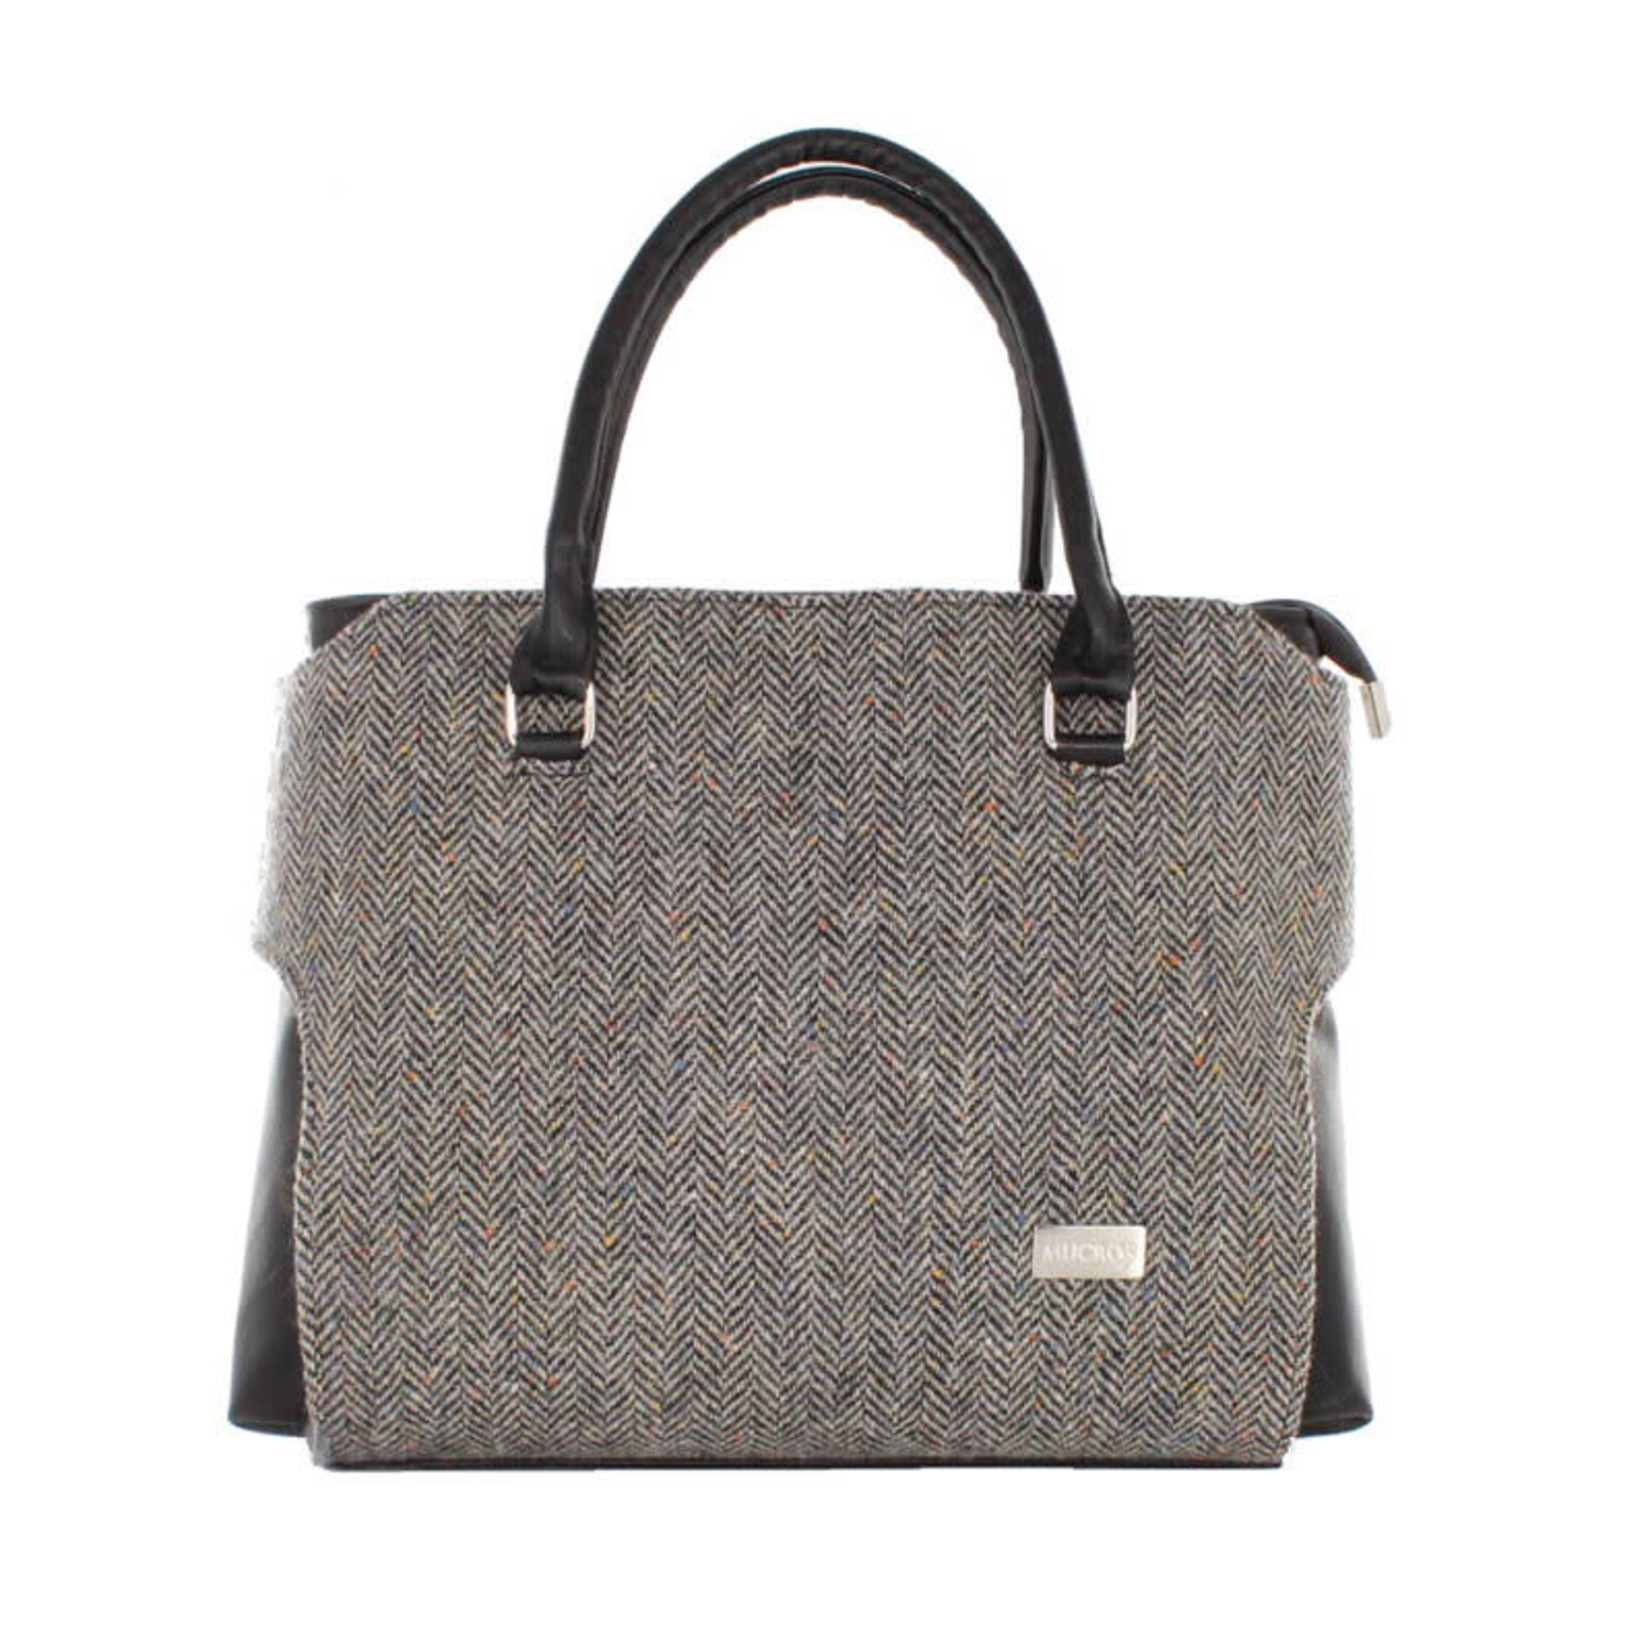 Mucros Emily Leather Bag: Charcoal Fleck